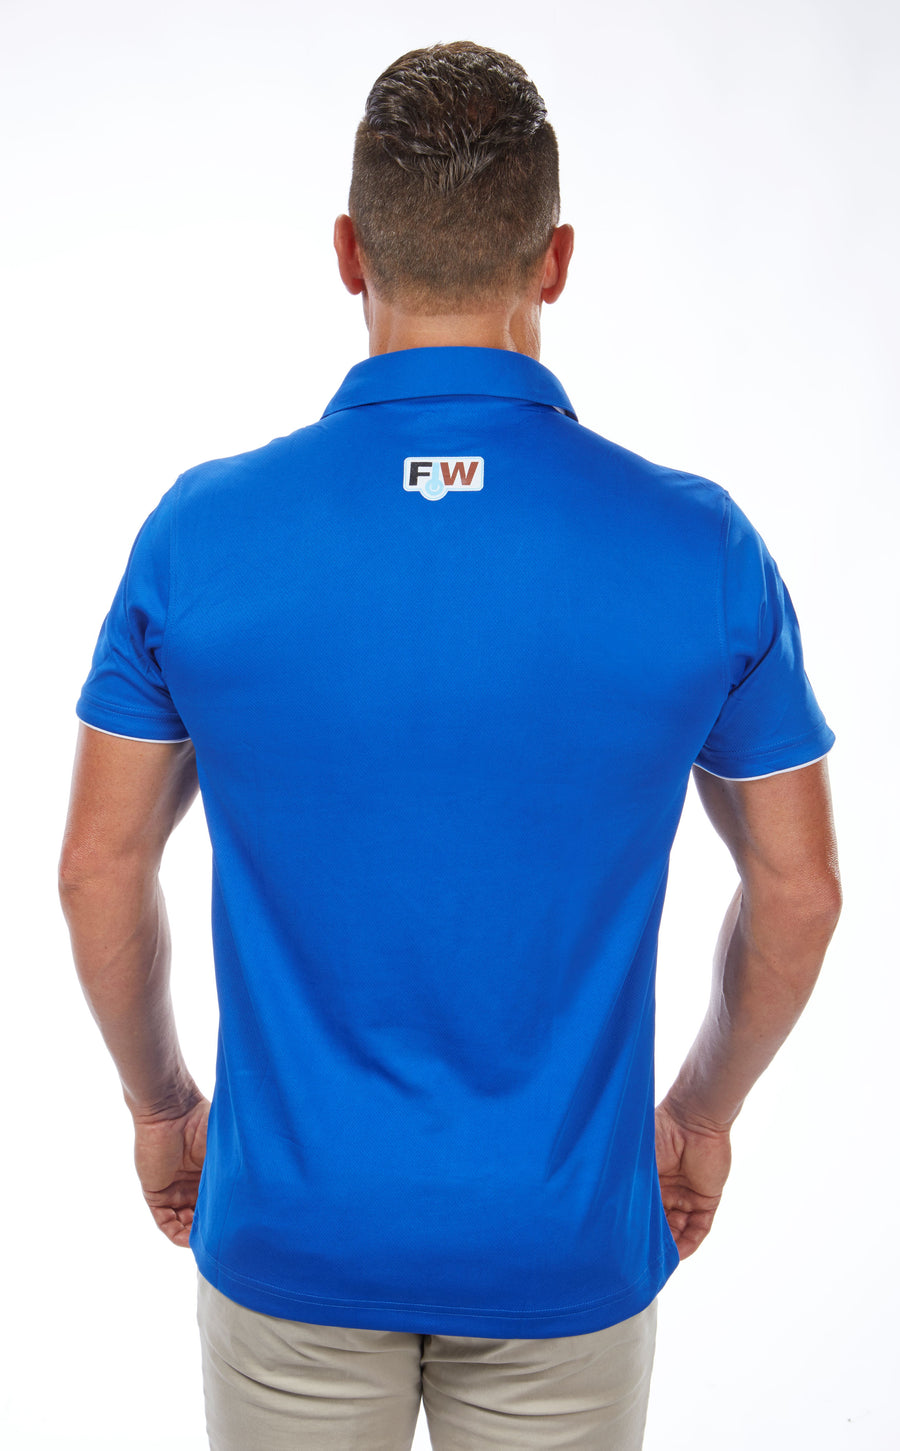 FW Blue/White Golf Shirt